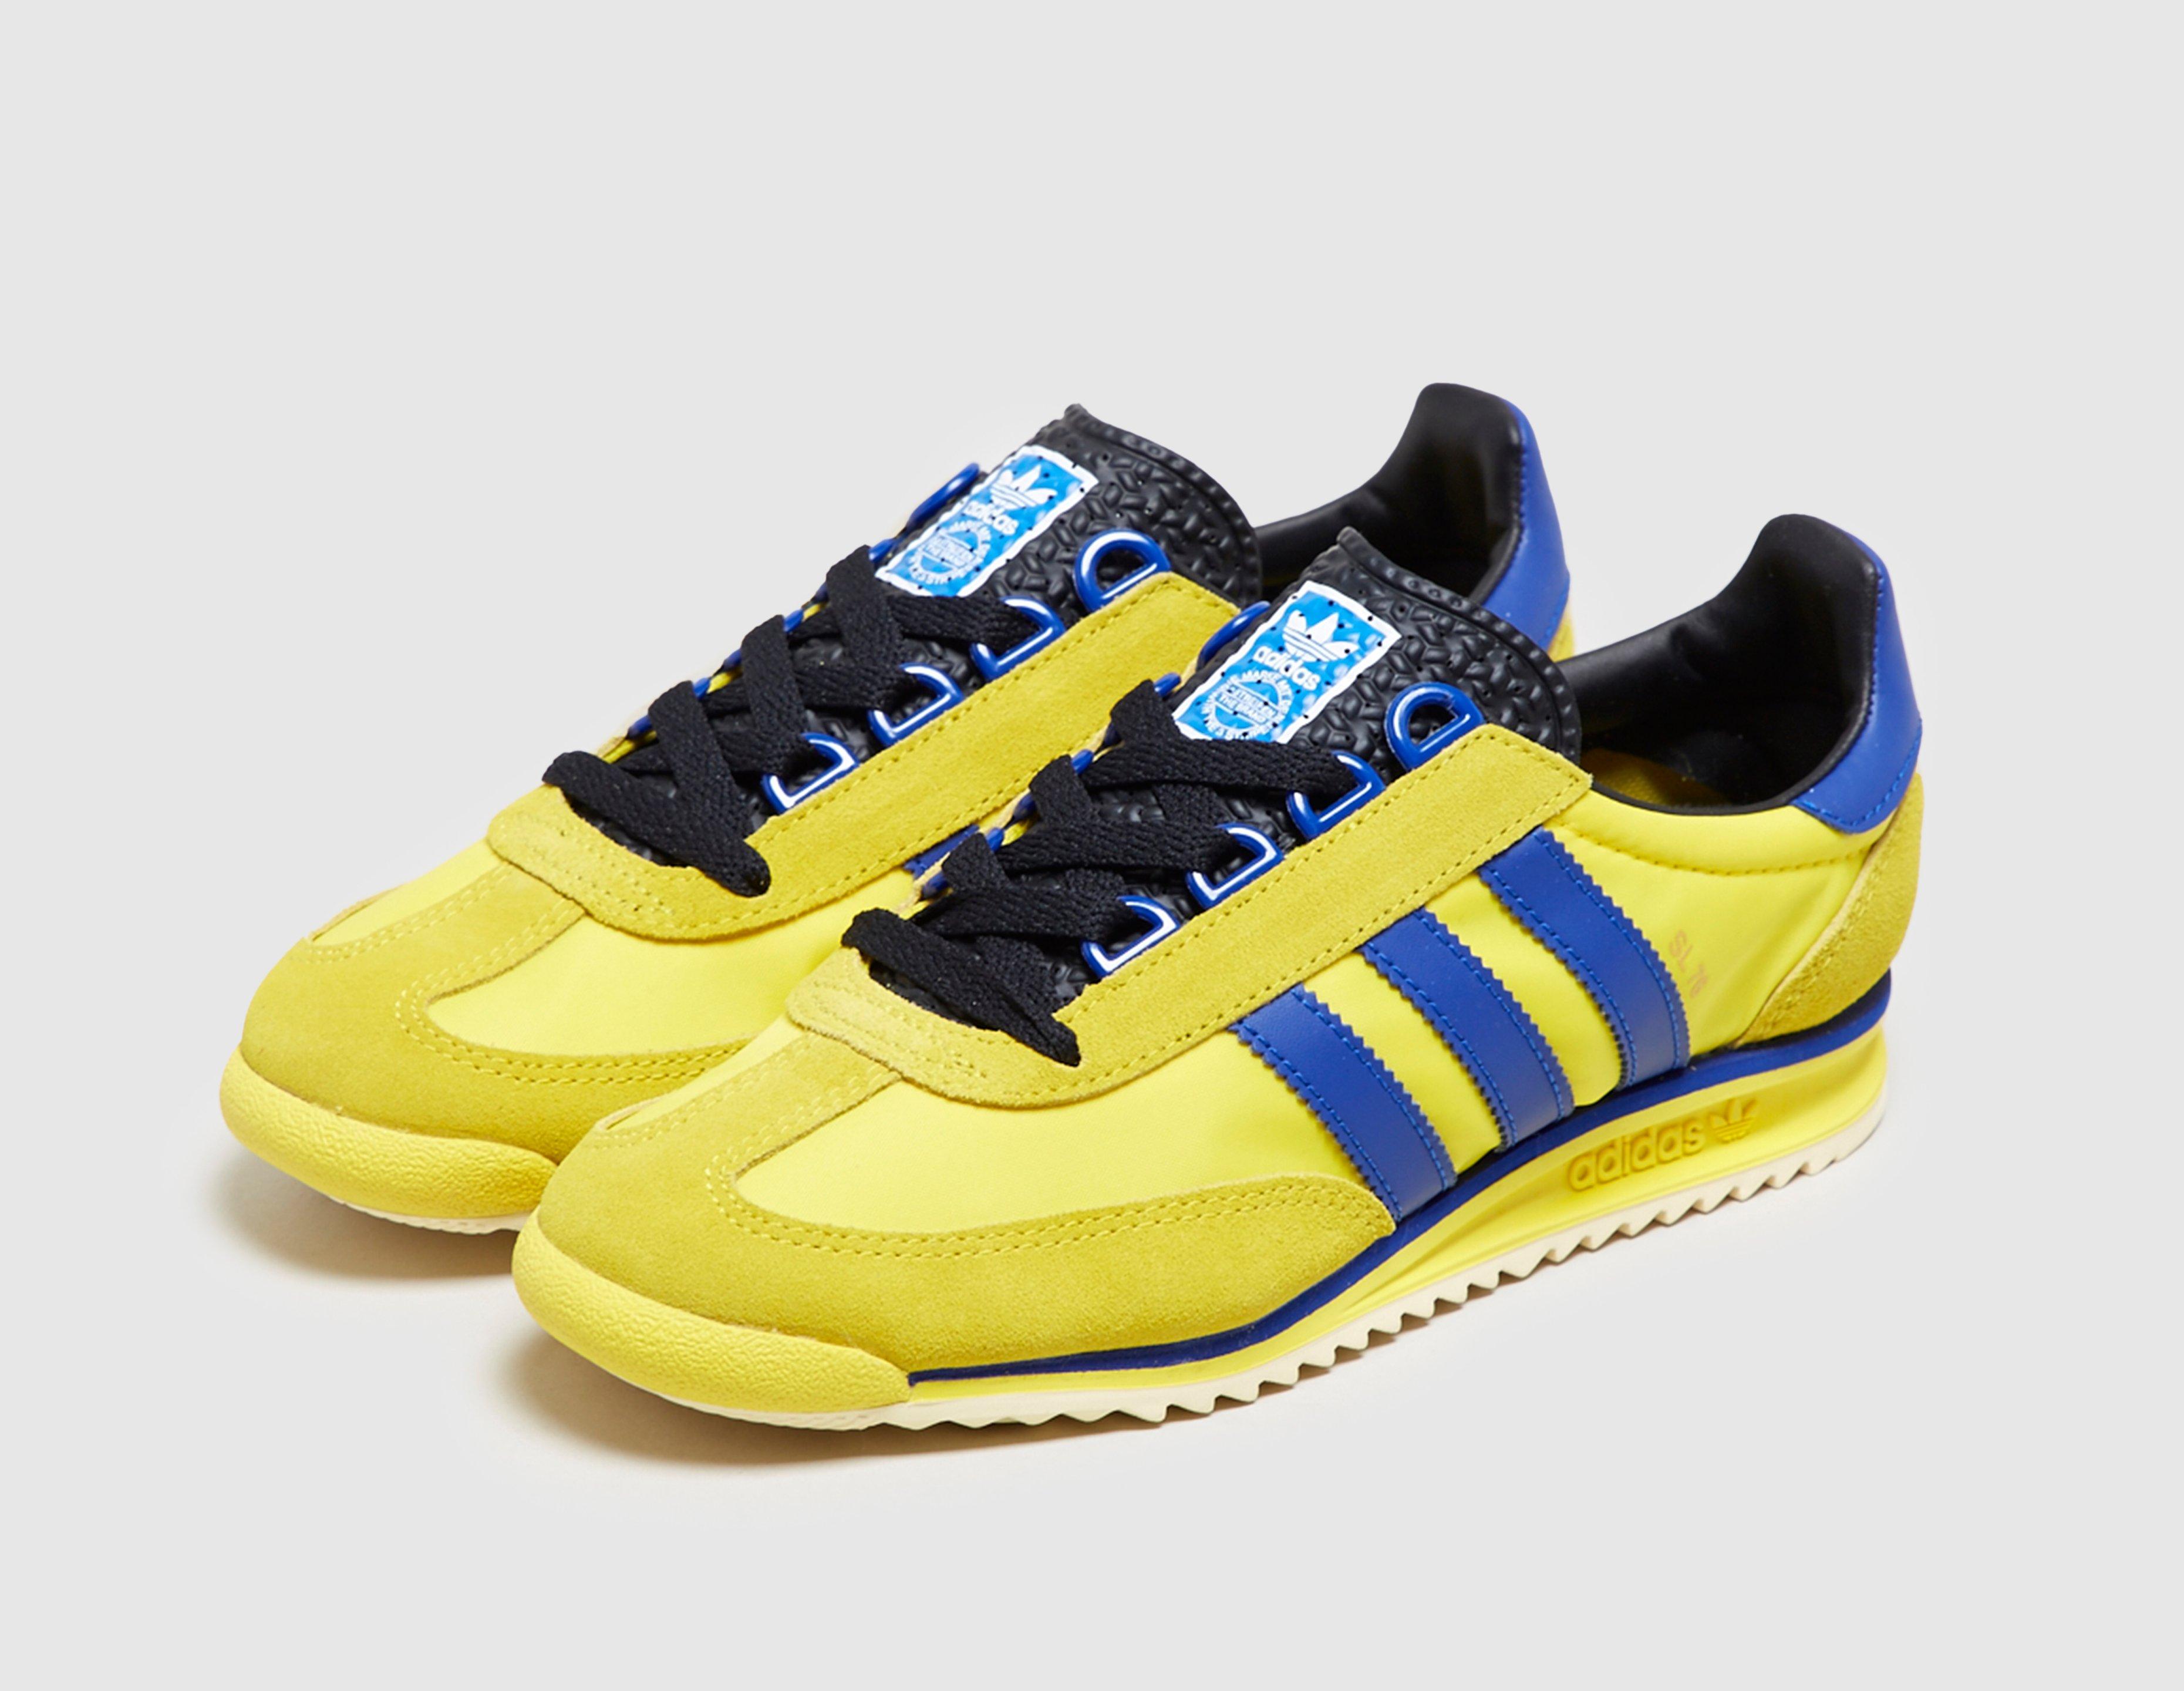 adidas sl76 yellow blue